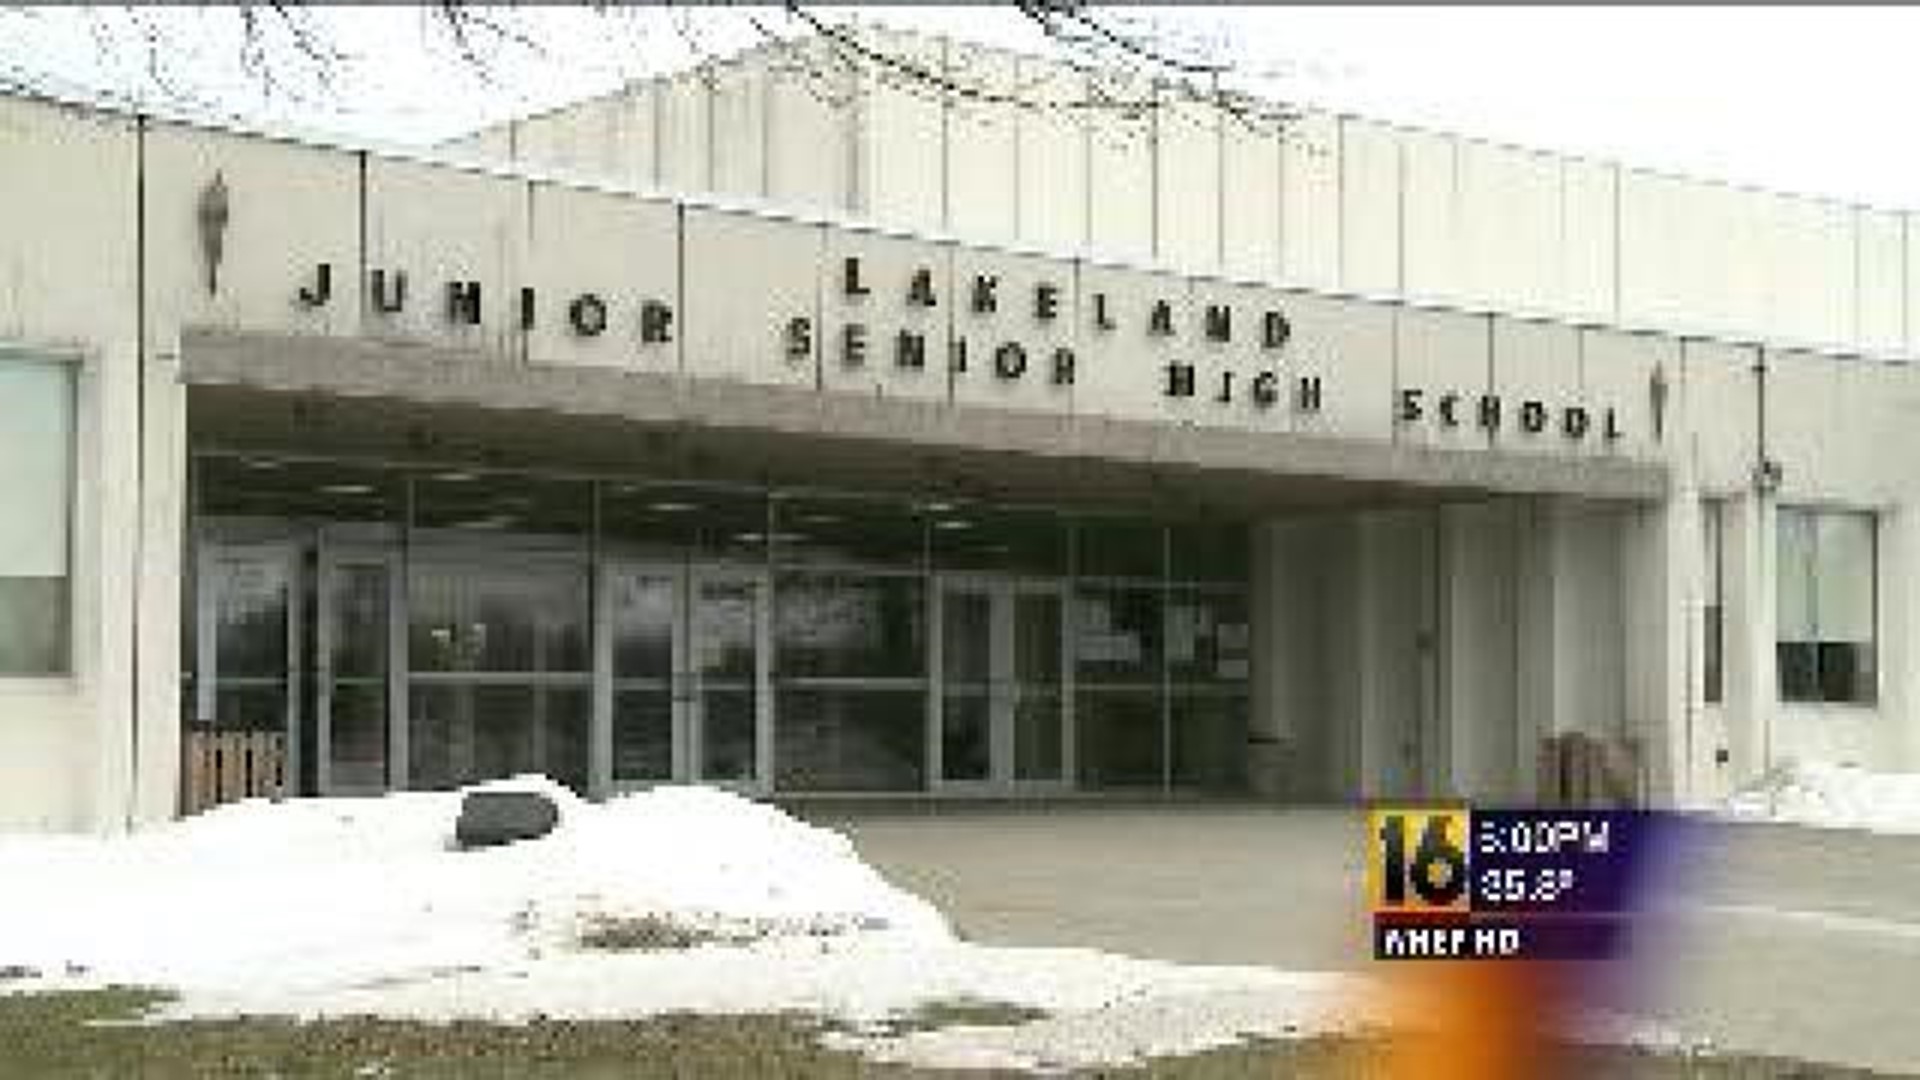 Bullet Found in Lakeland High School